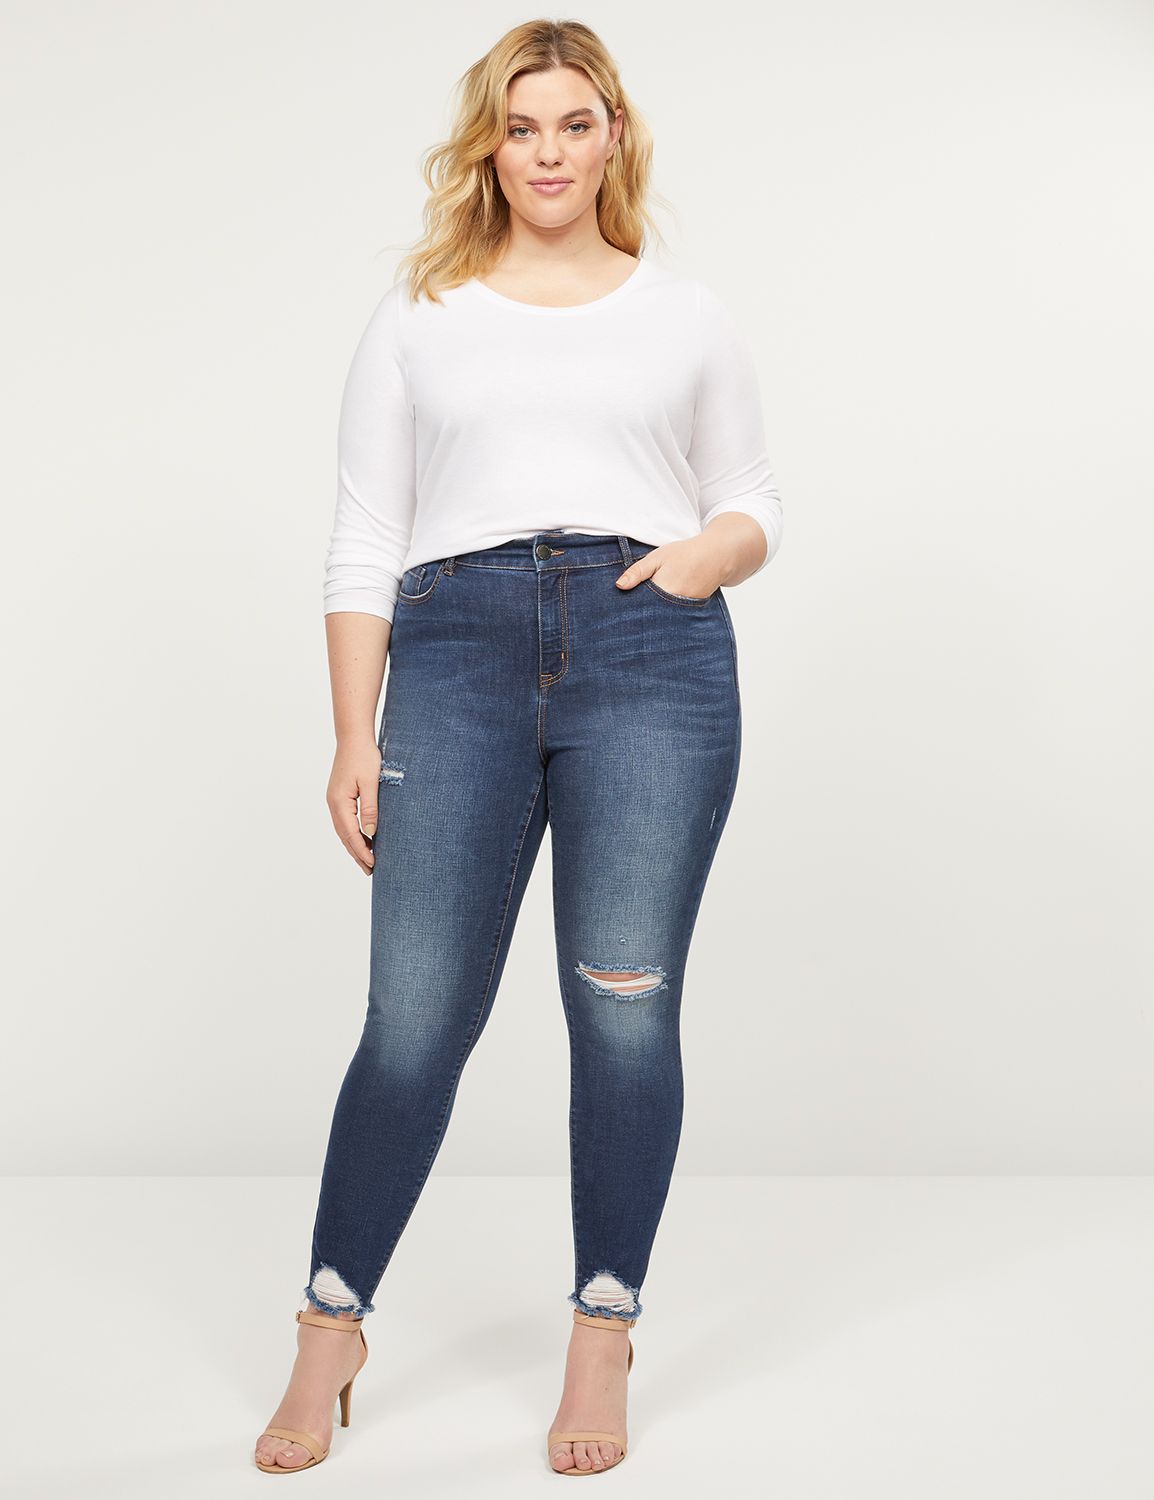 lane bryant skinny jeans